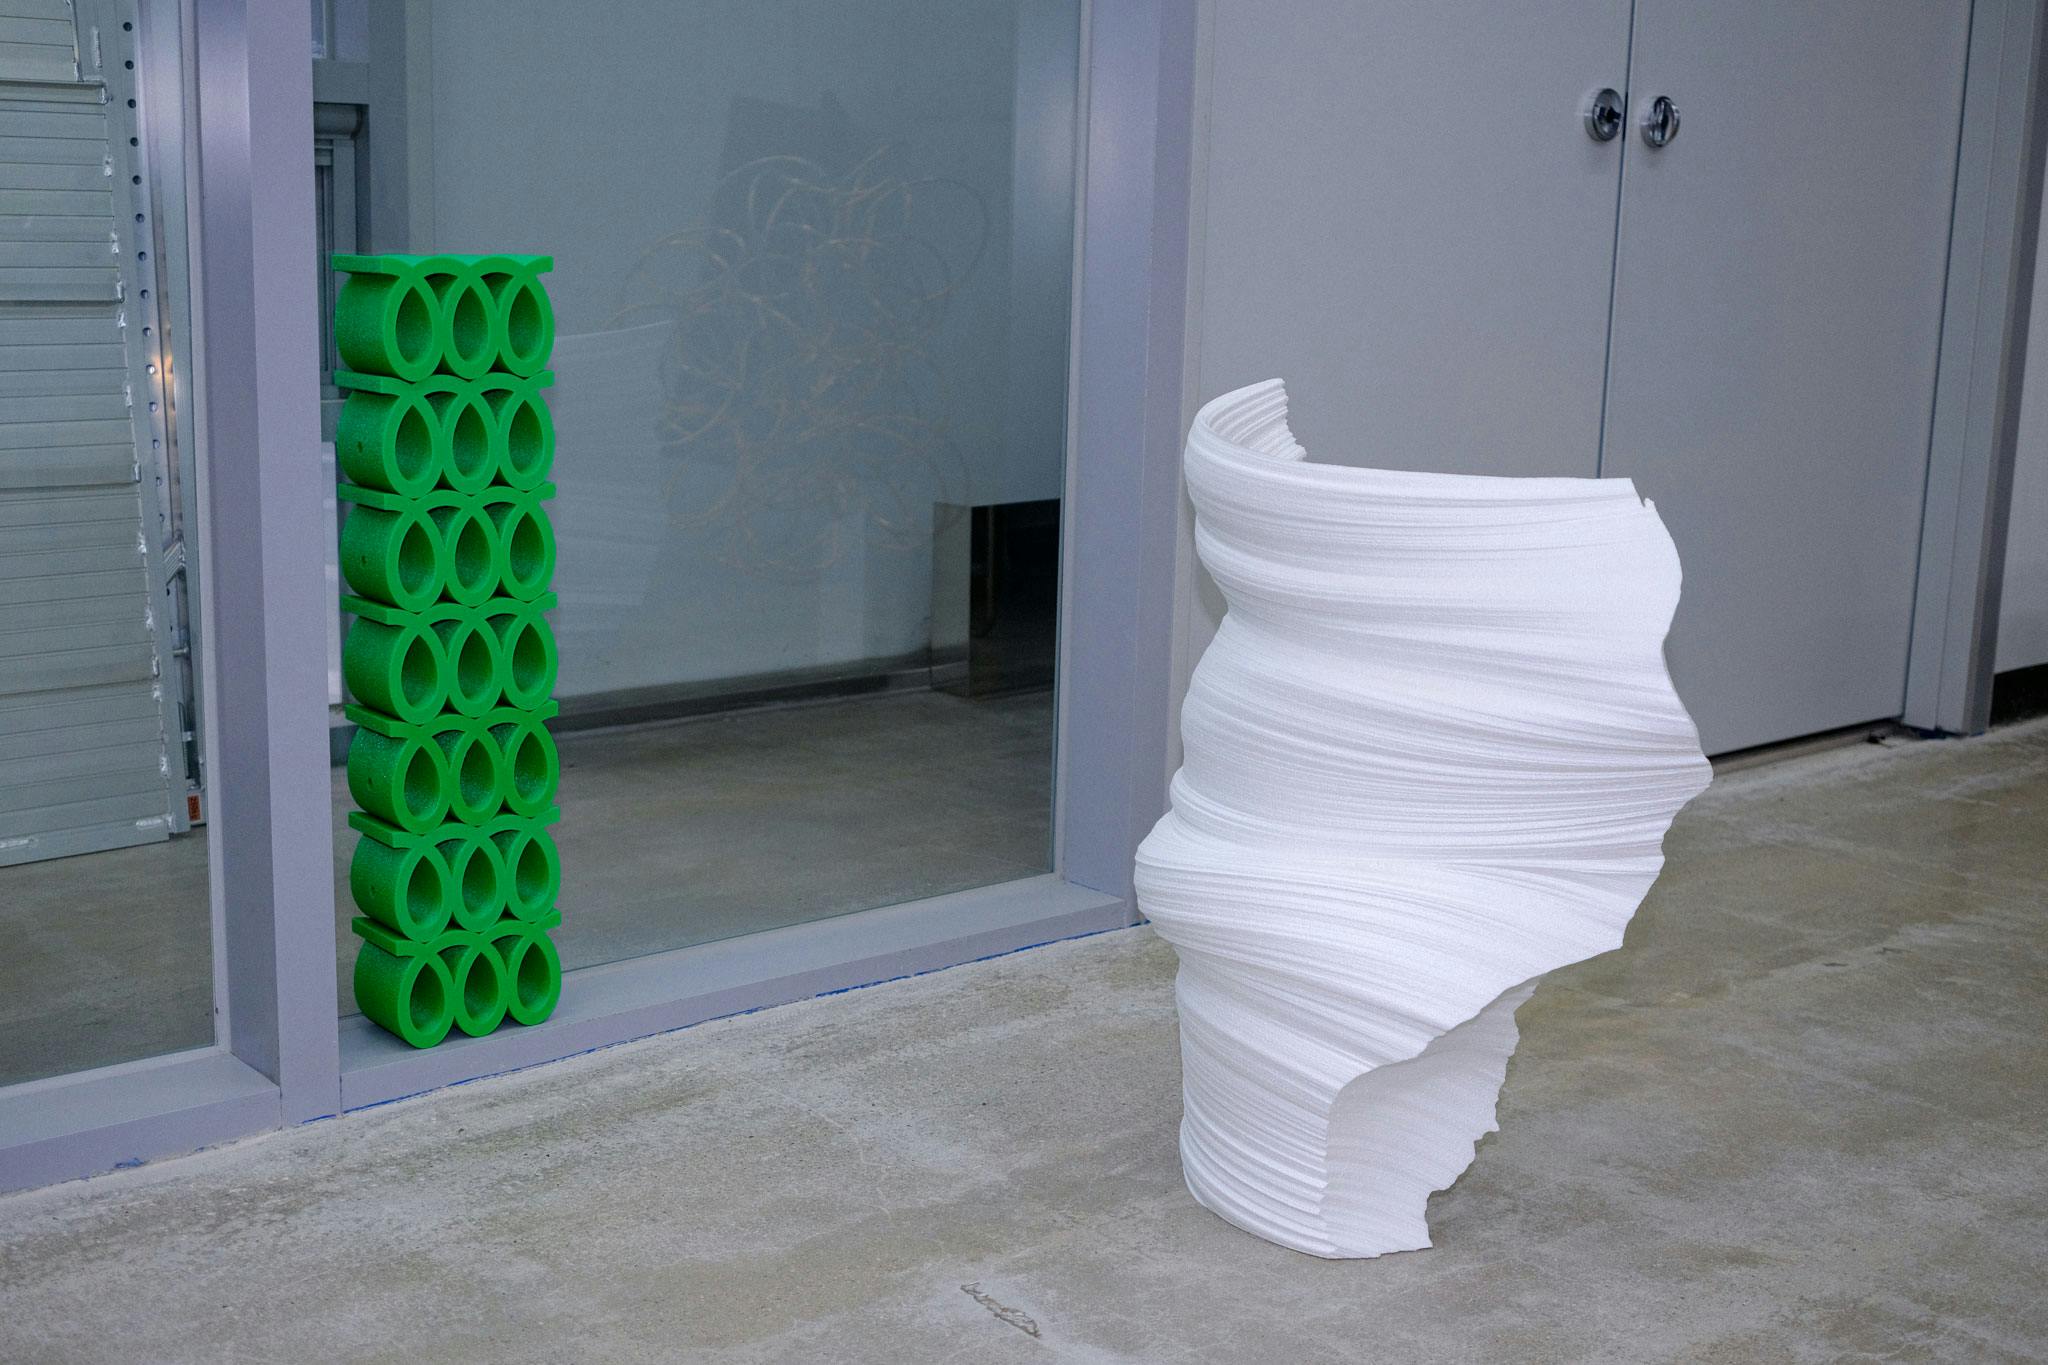 3D Printed Sculptures in Kwangho Lee's Seoul Studio | Photo by Kristen de la Vallière